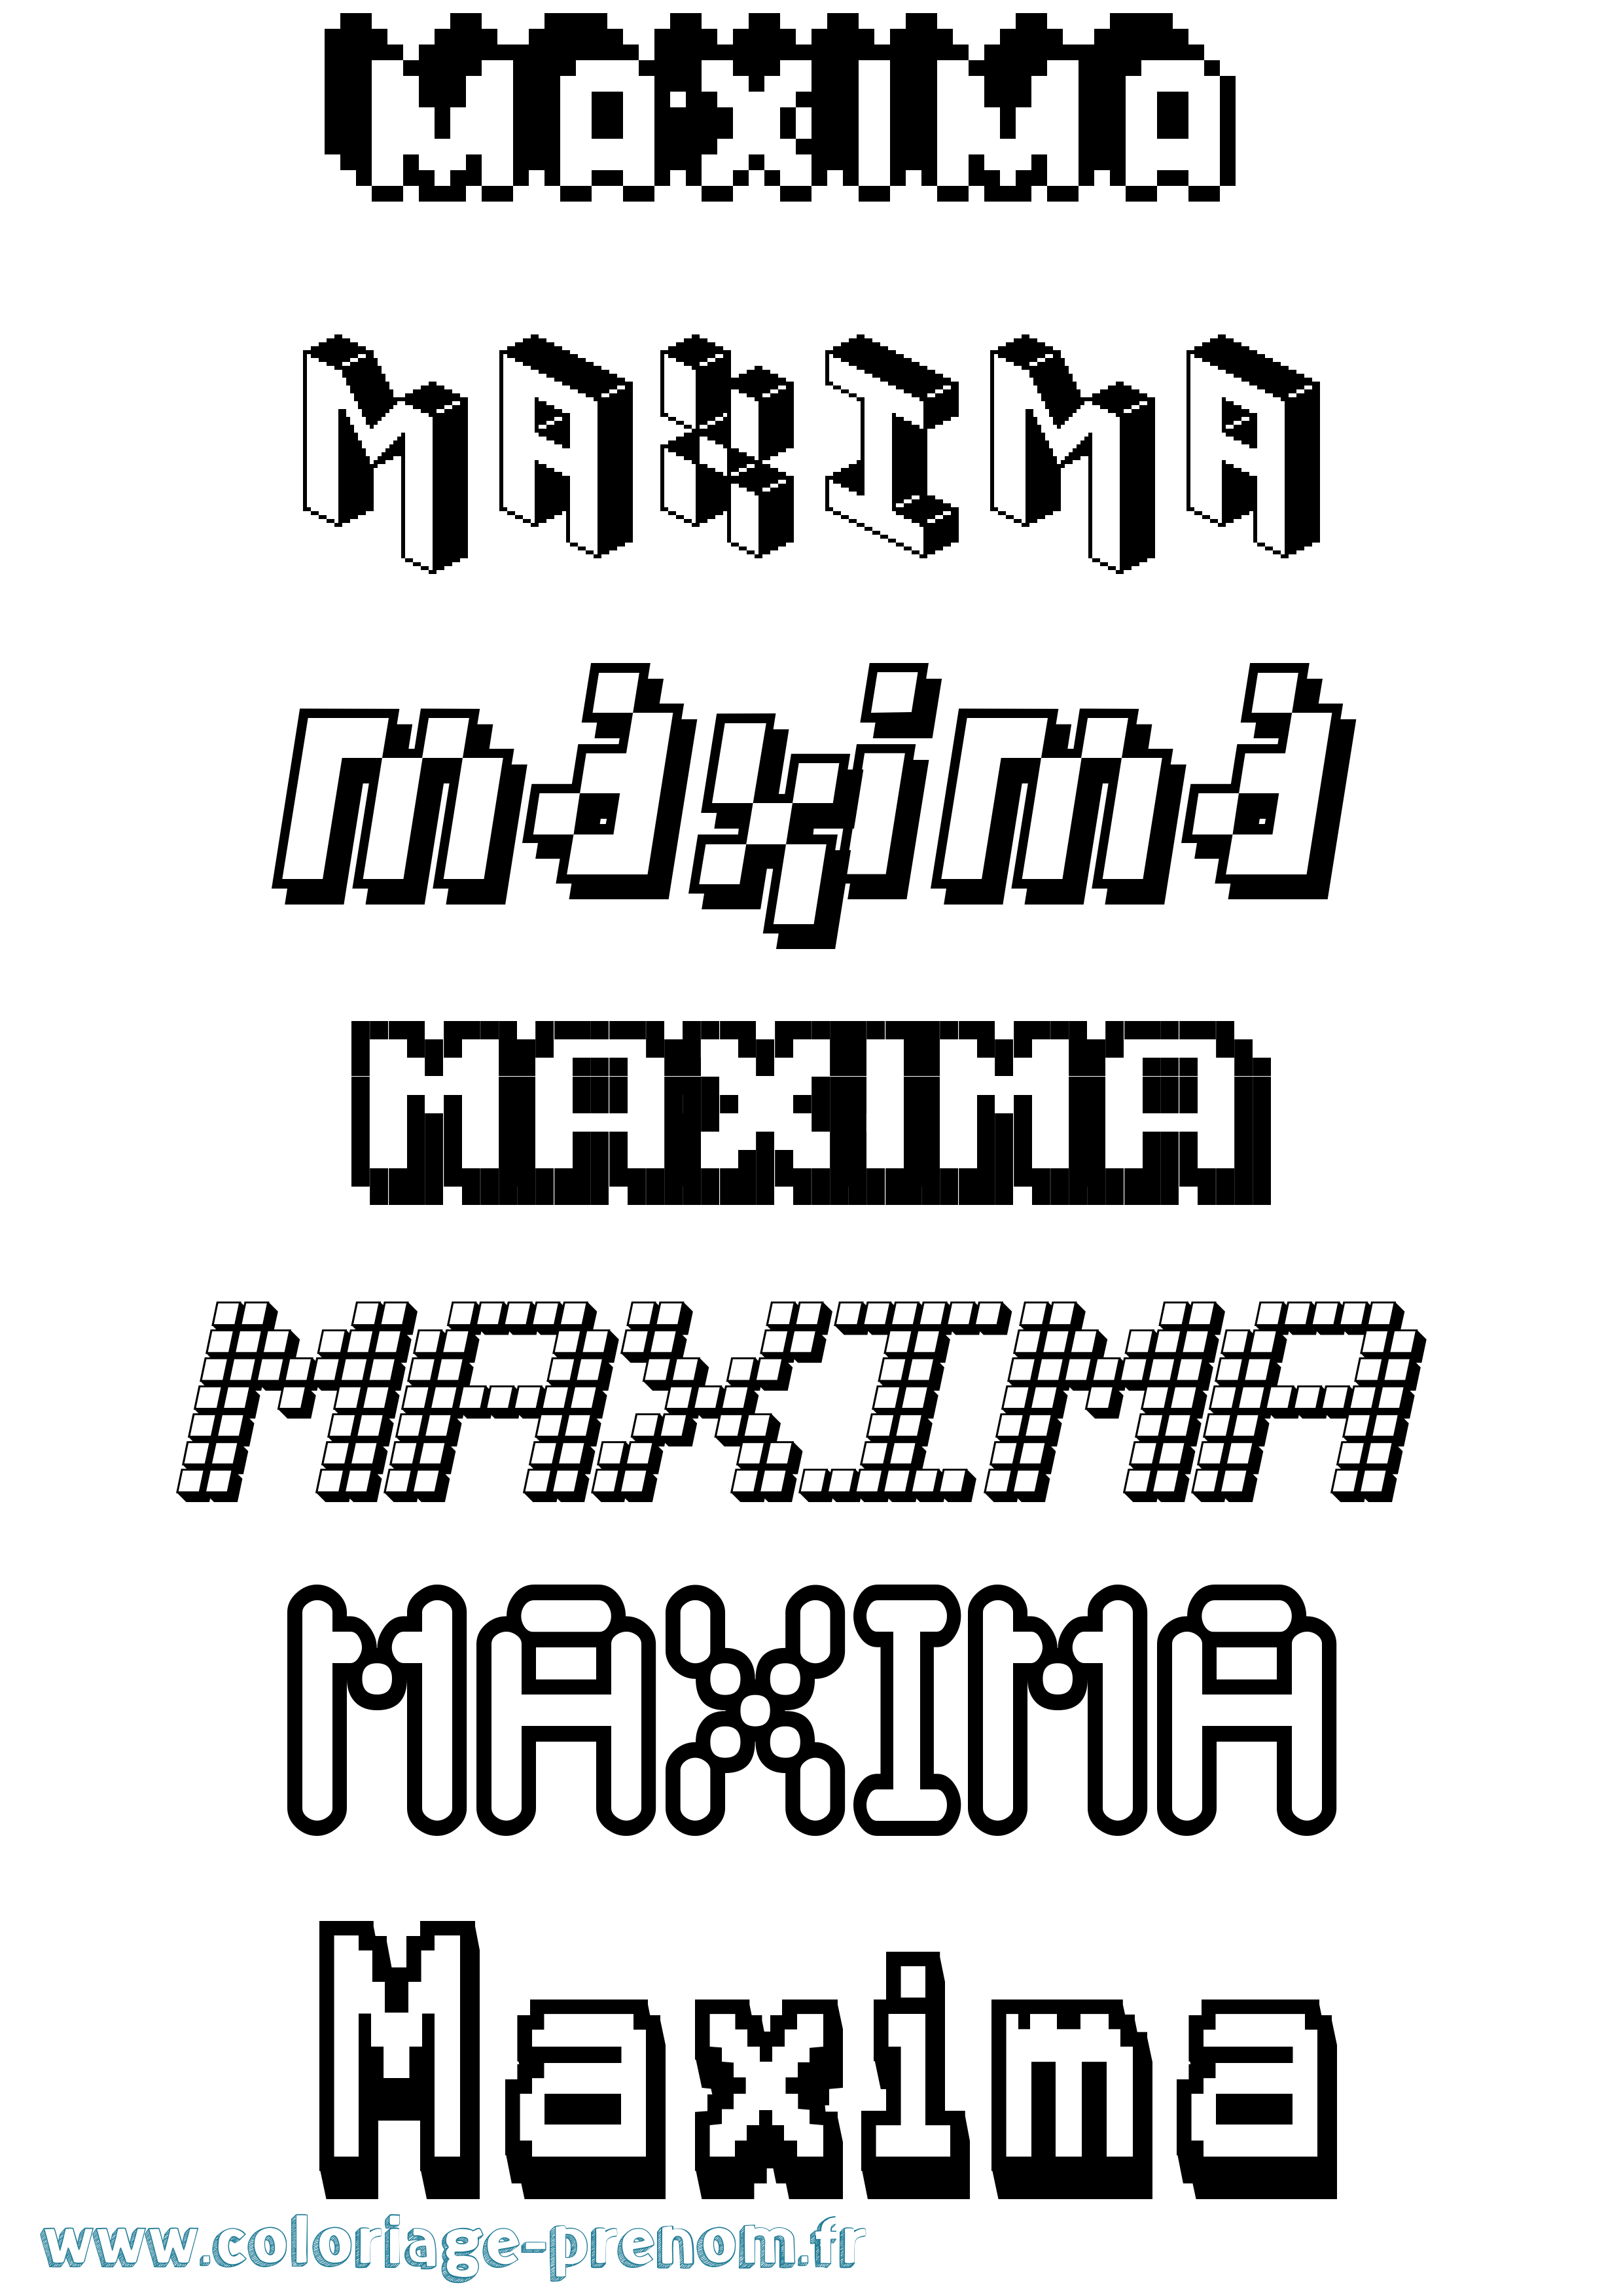 Coloriage prénom Maxima Pixel